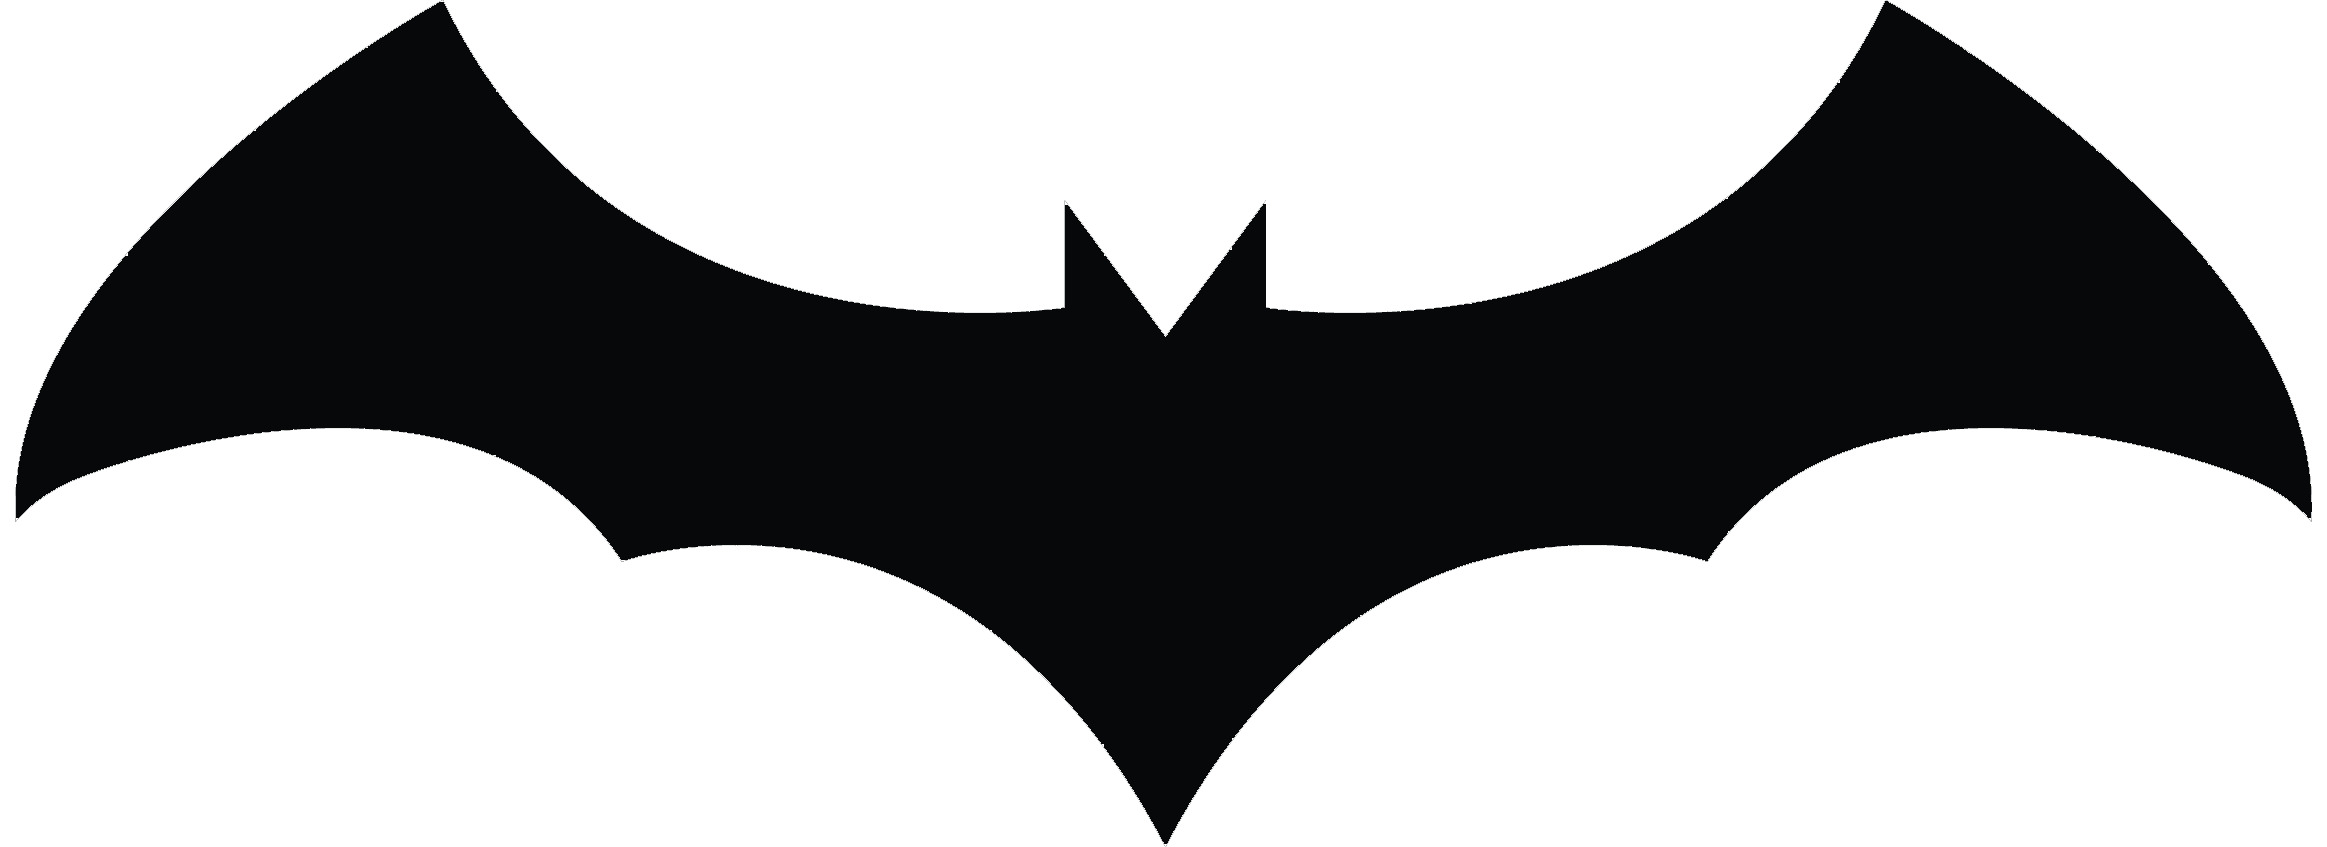 Bat Logo Open Wings icons